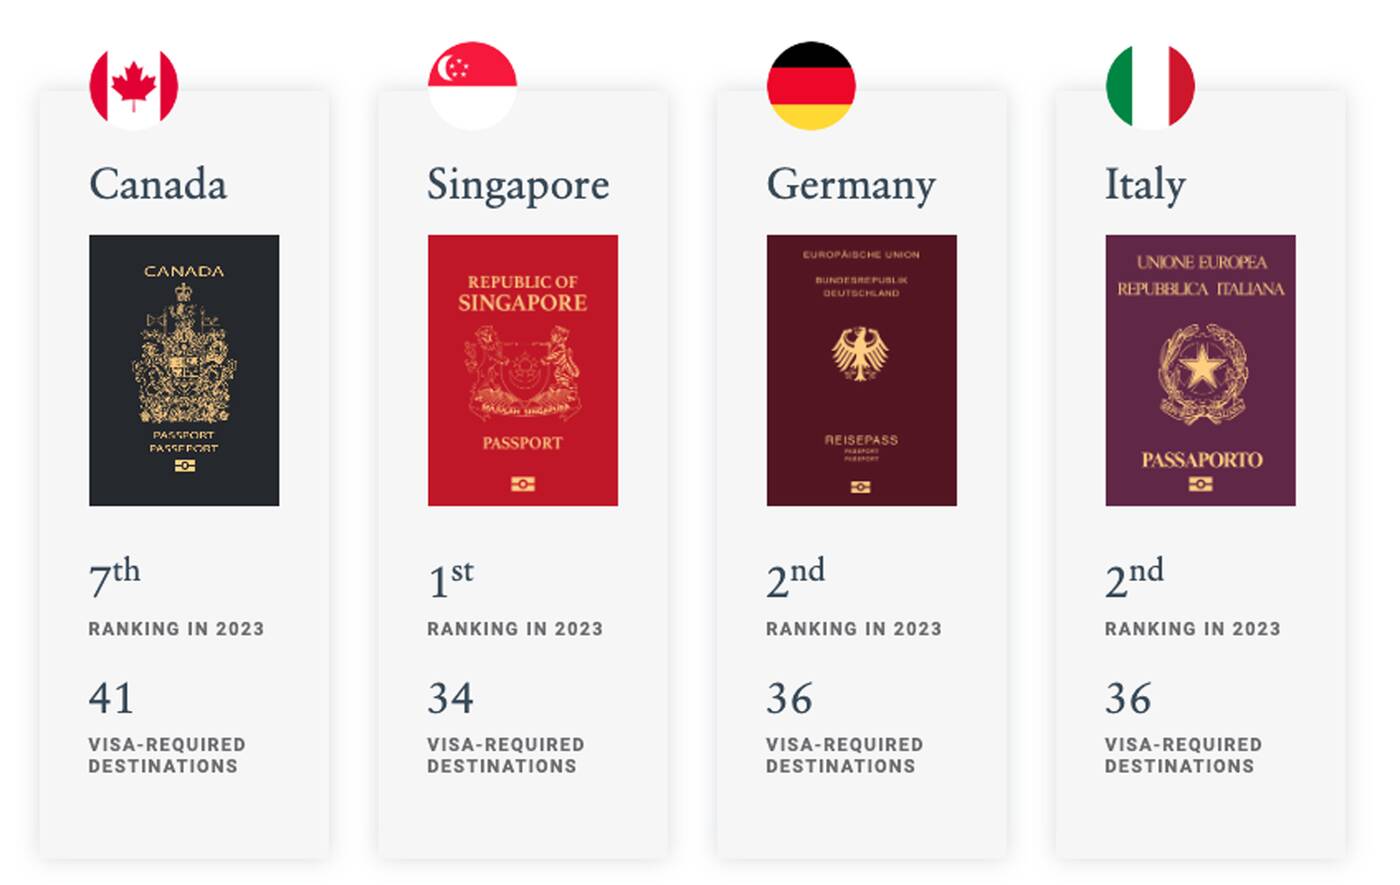 Most powerful passports 2023: U.S. ranked below Romania, Canada and  Malaysia